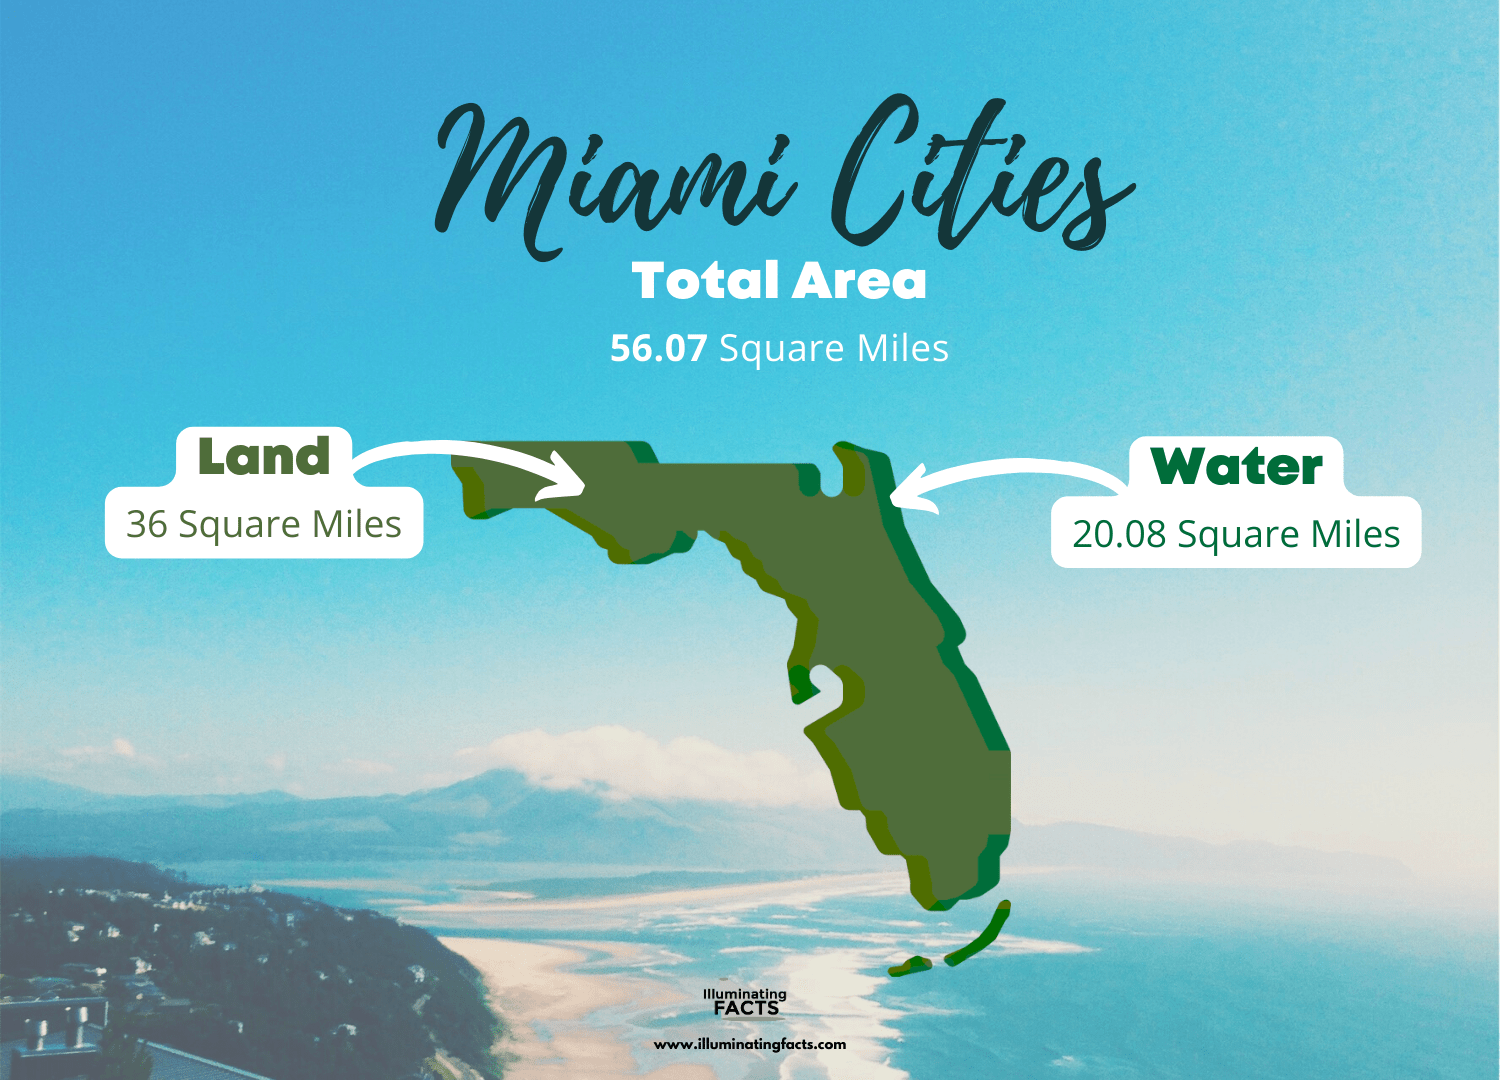 Miami Cities total Area